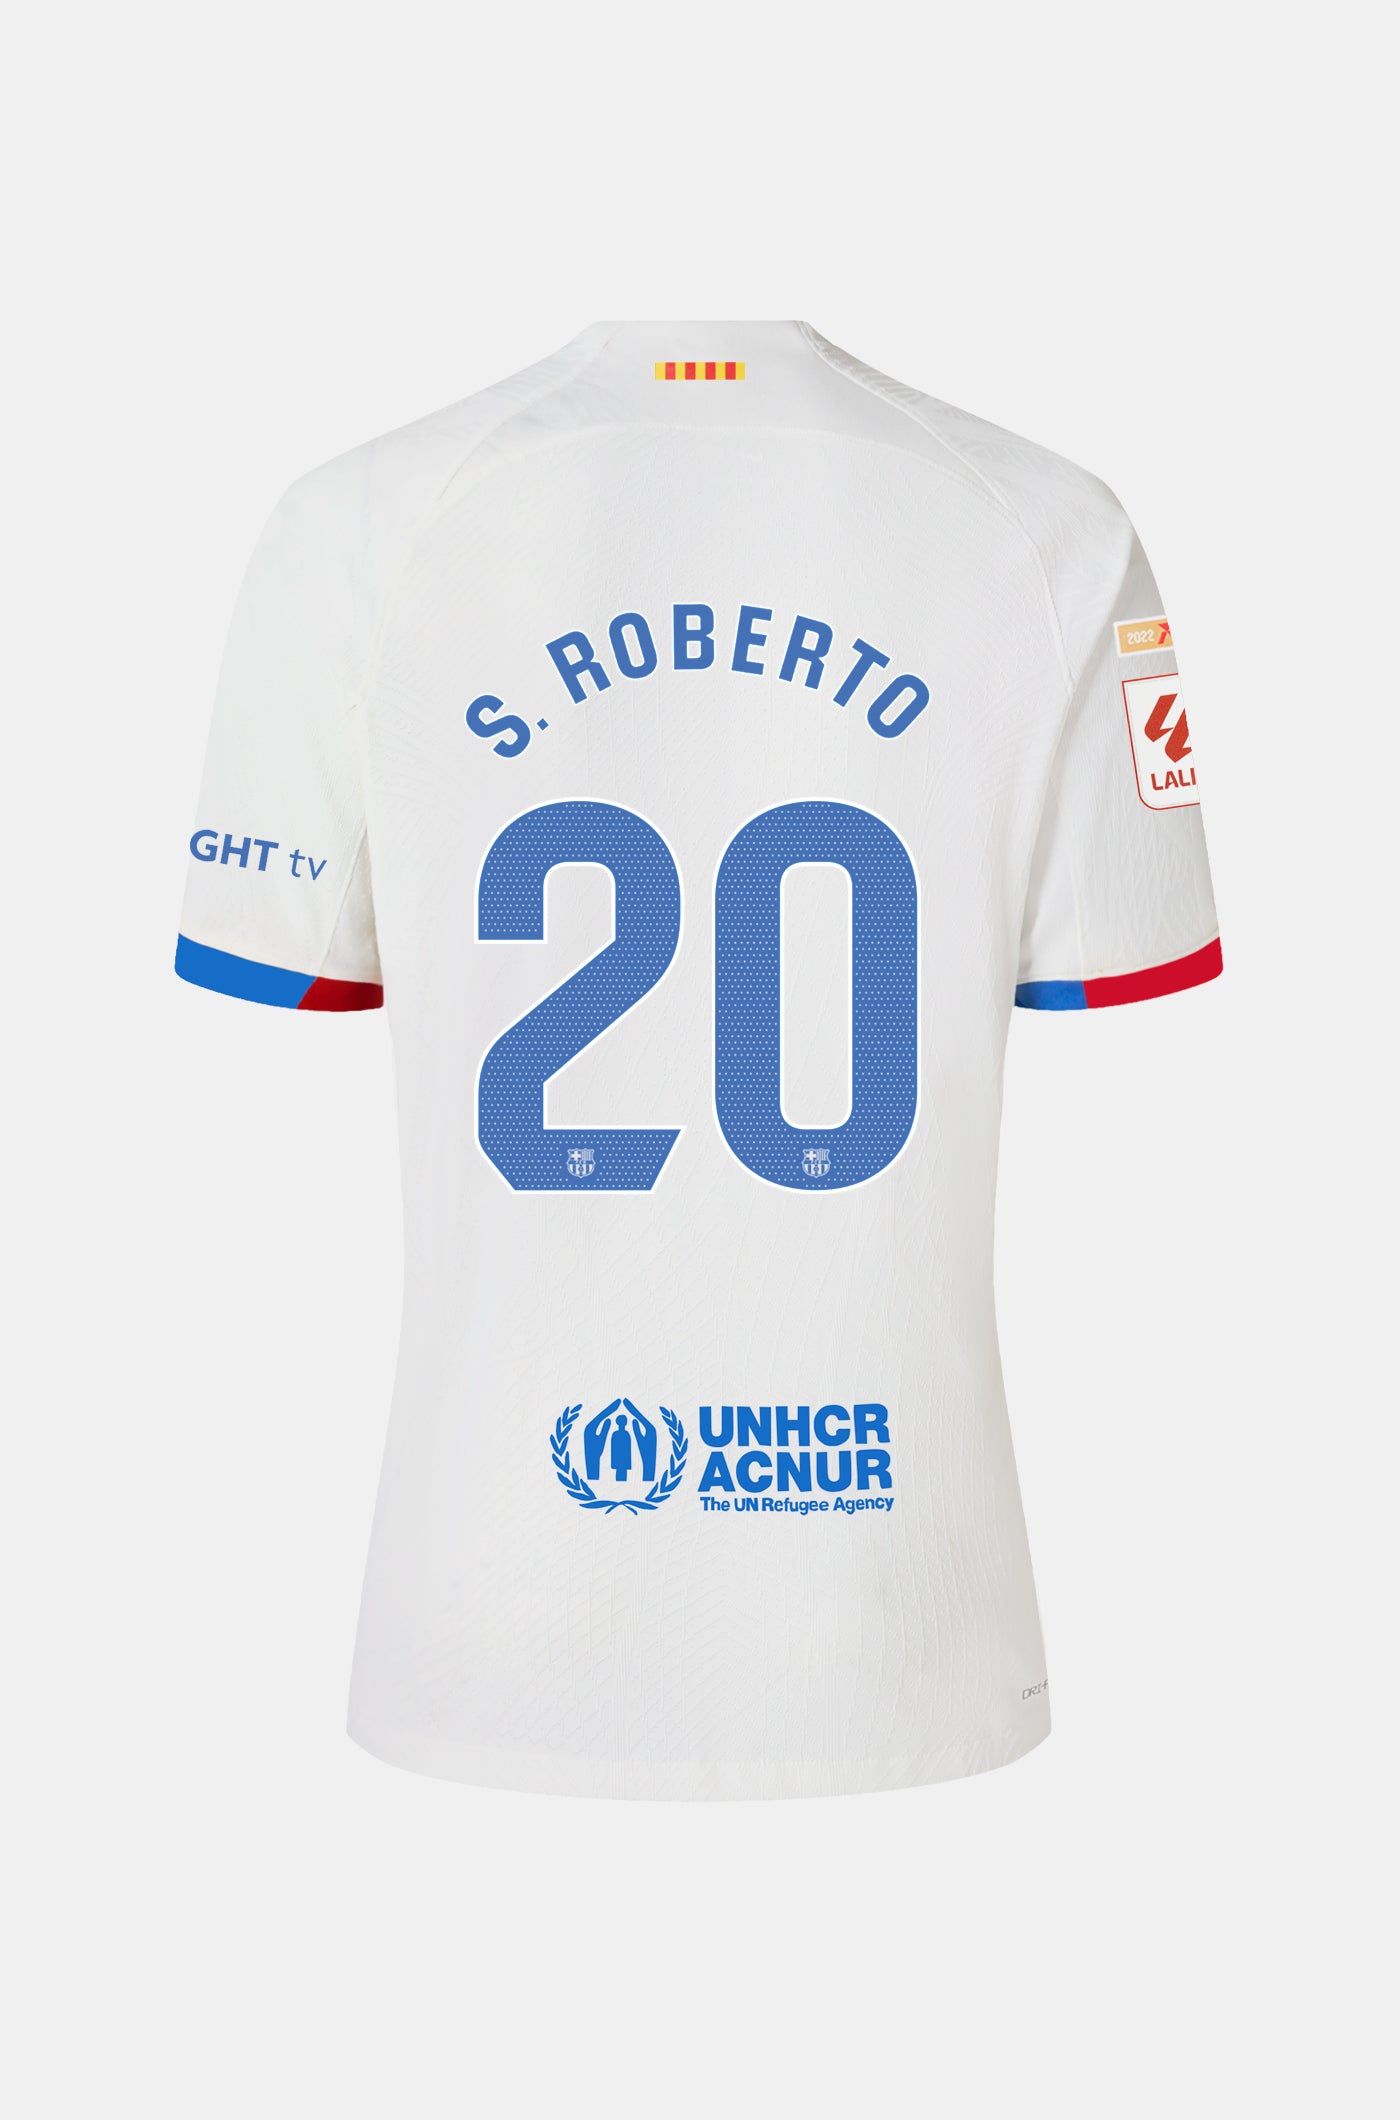 LFP FC Barcelona away shirt 23/24  - S. ROBERTO